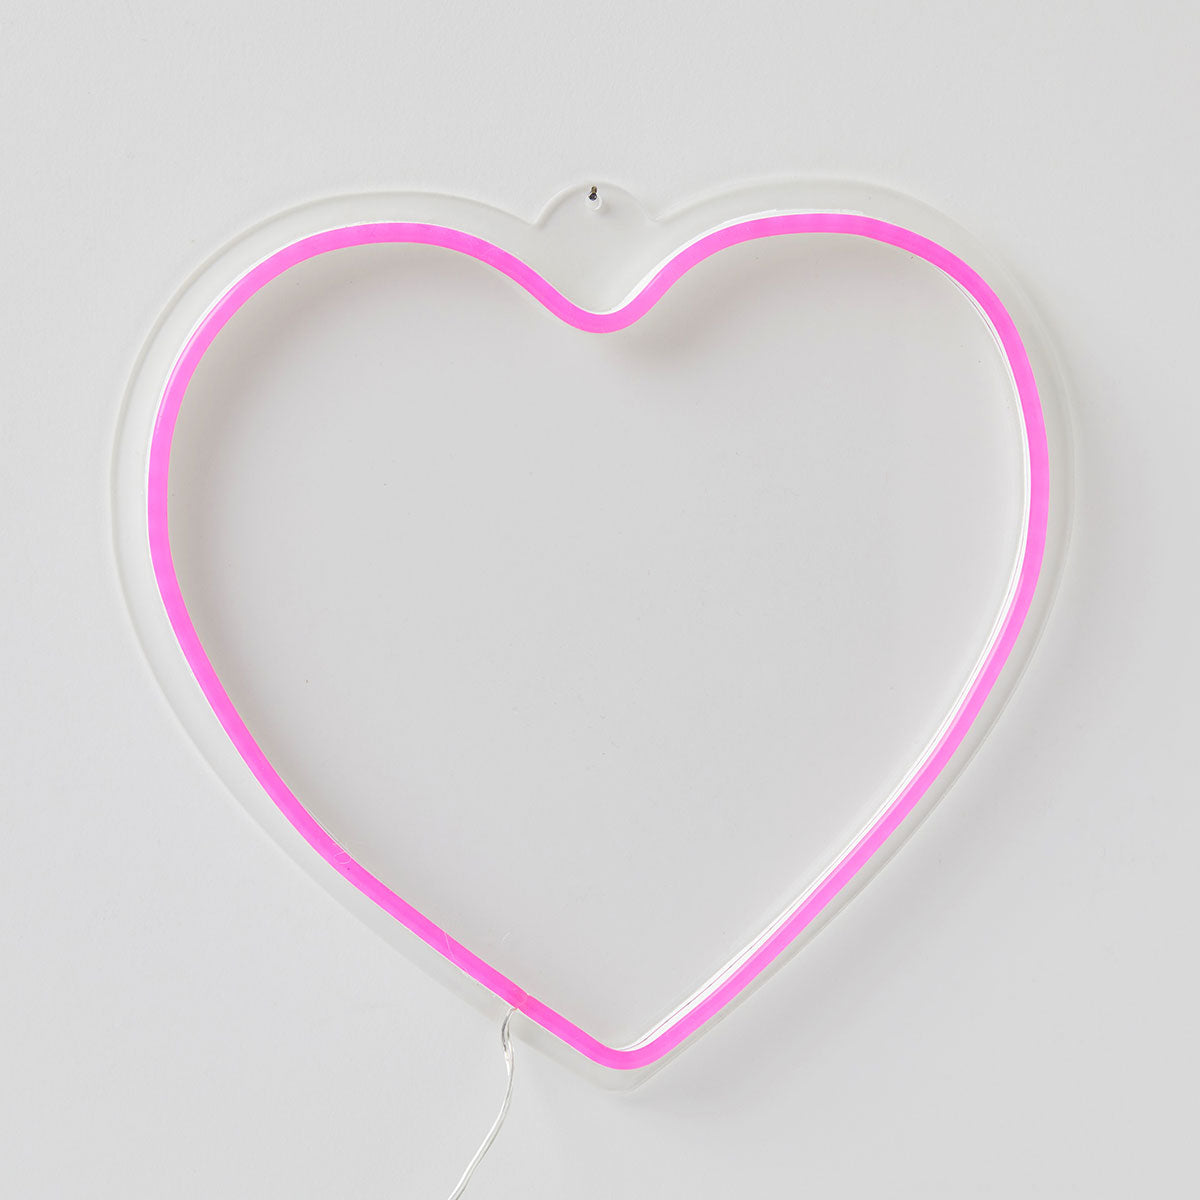 Heart LED Neon Hanging Light by Pilbeam Living